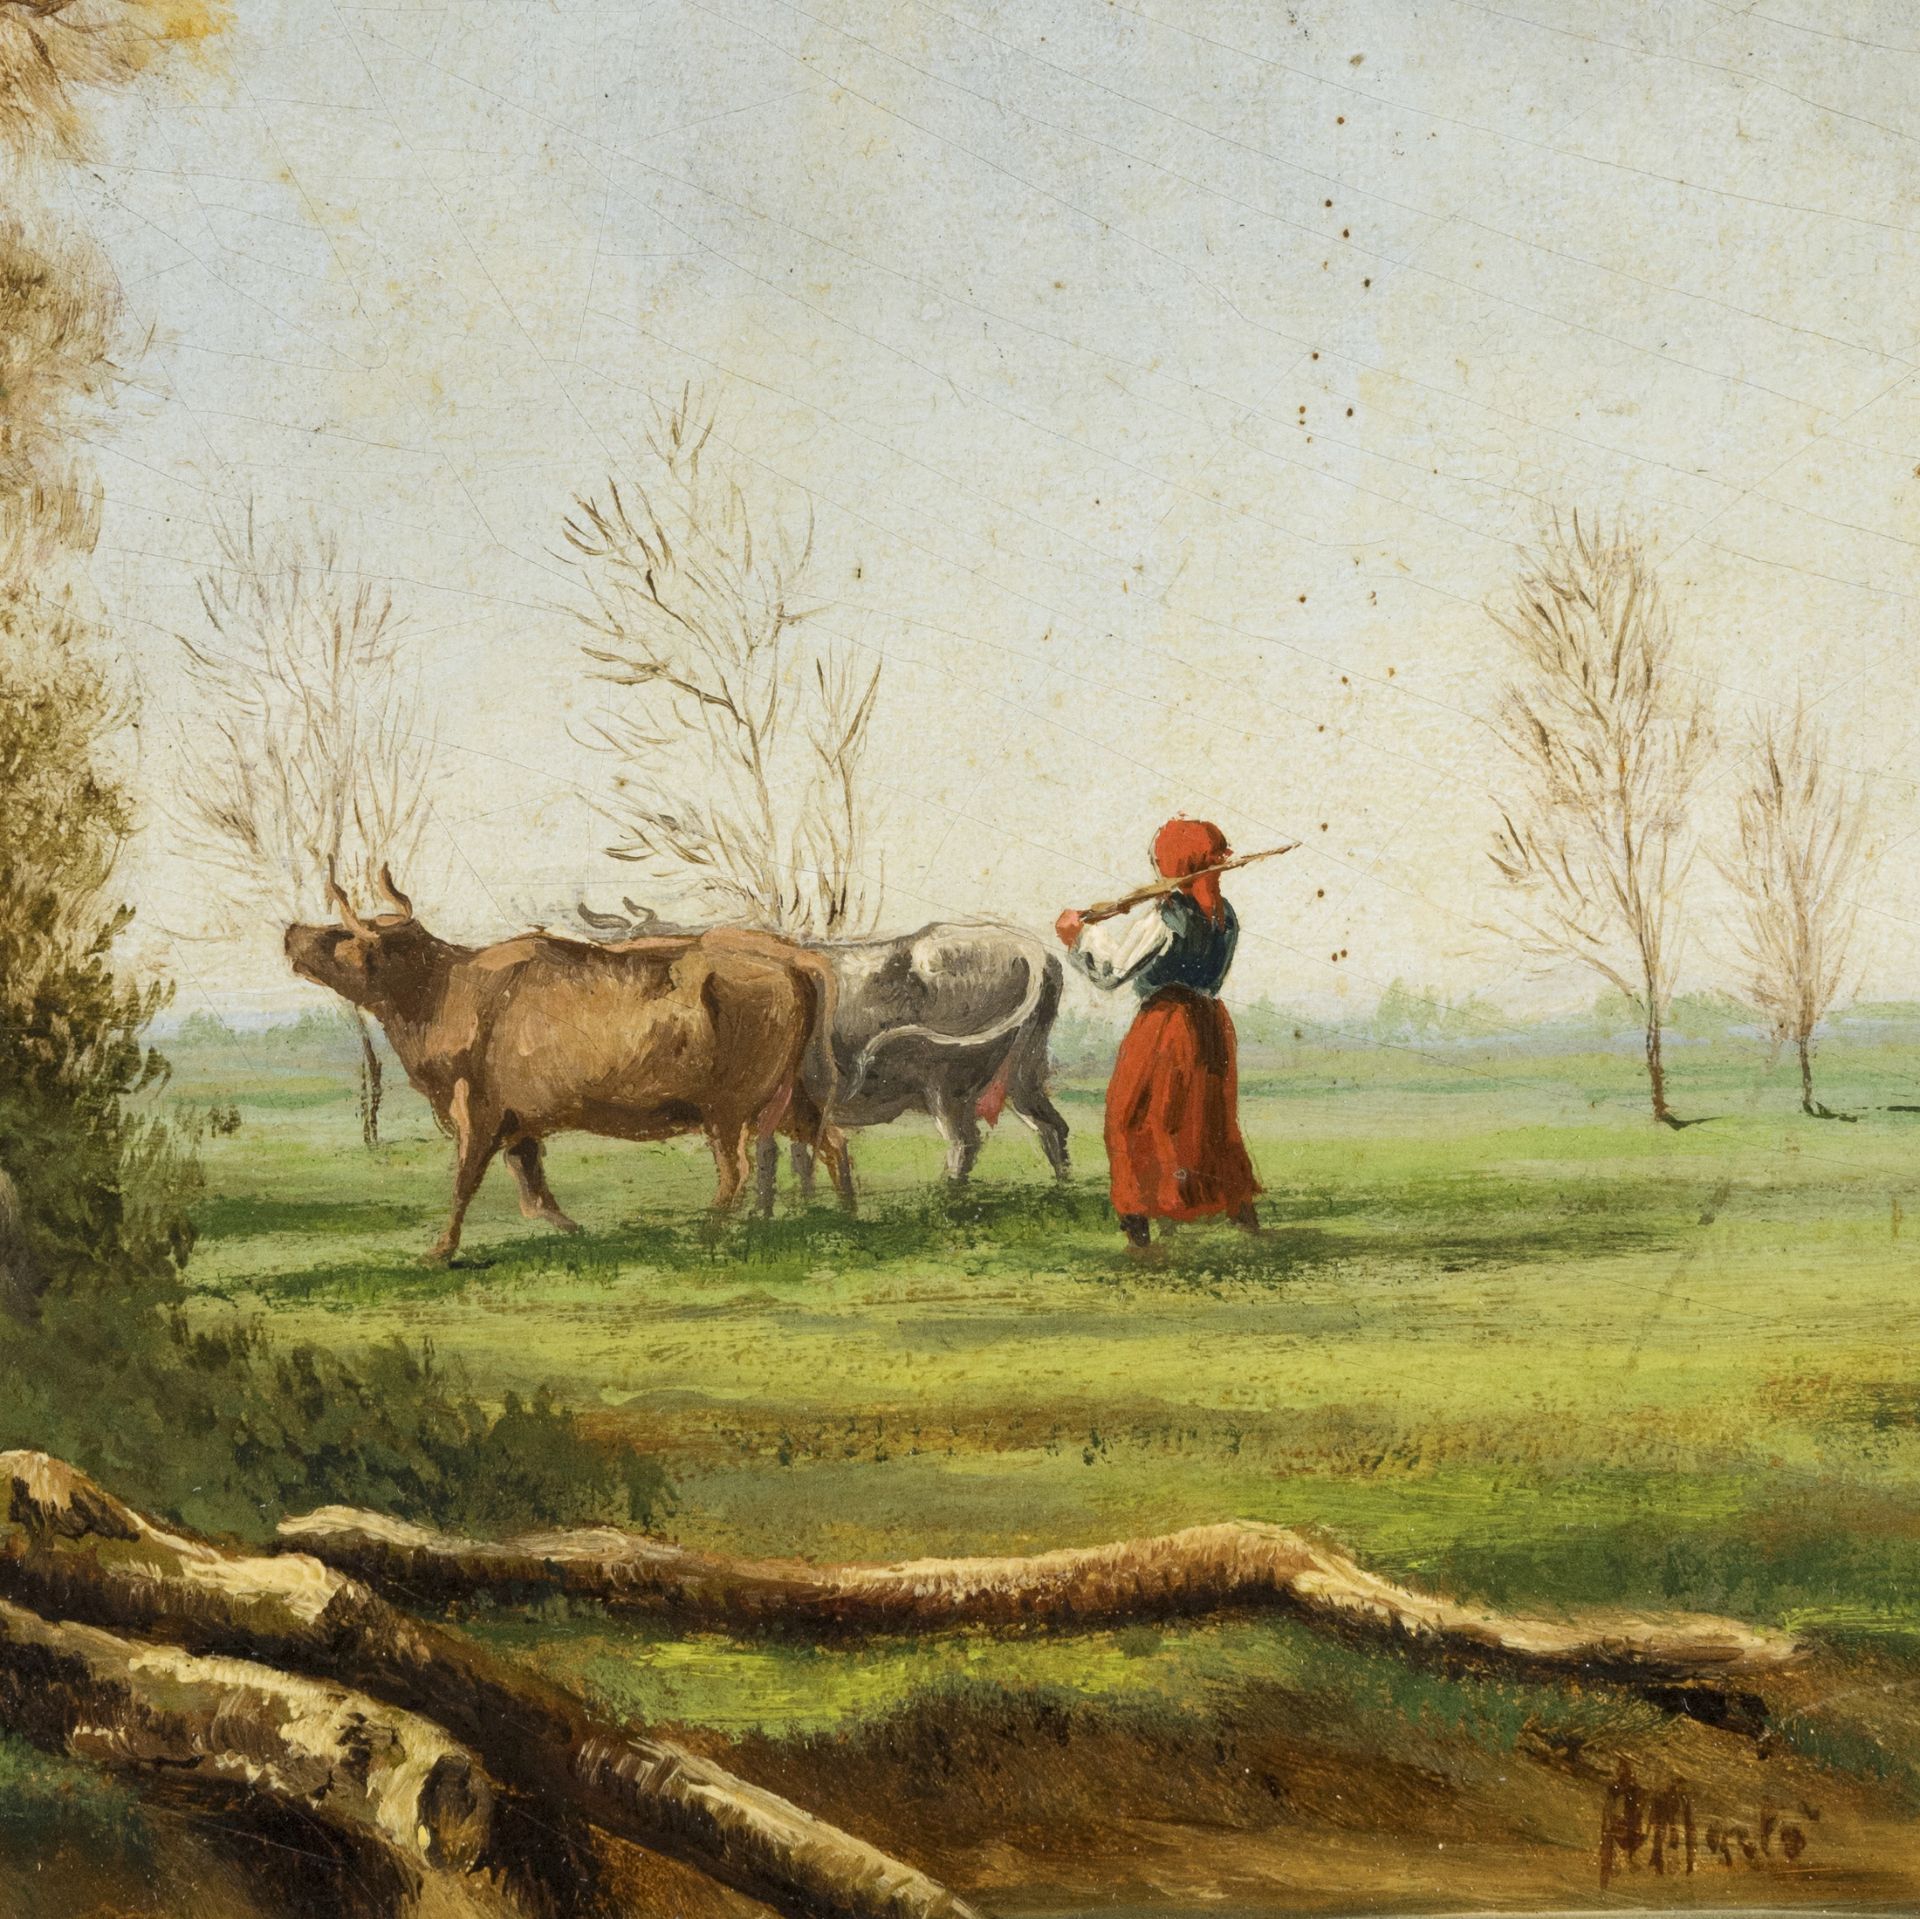 Andrea Markò (Vienna 1826 - Firenze 1890) - Image 2 of 3